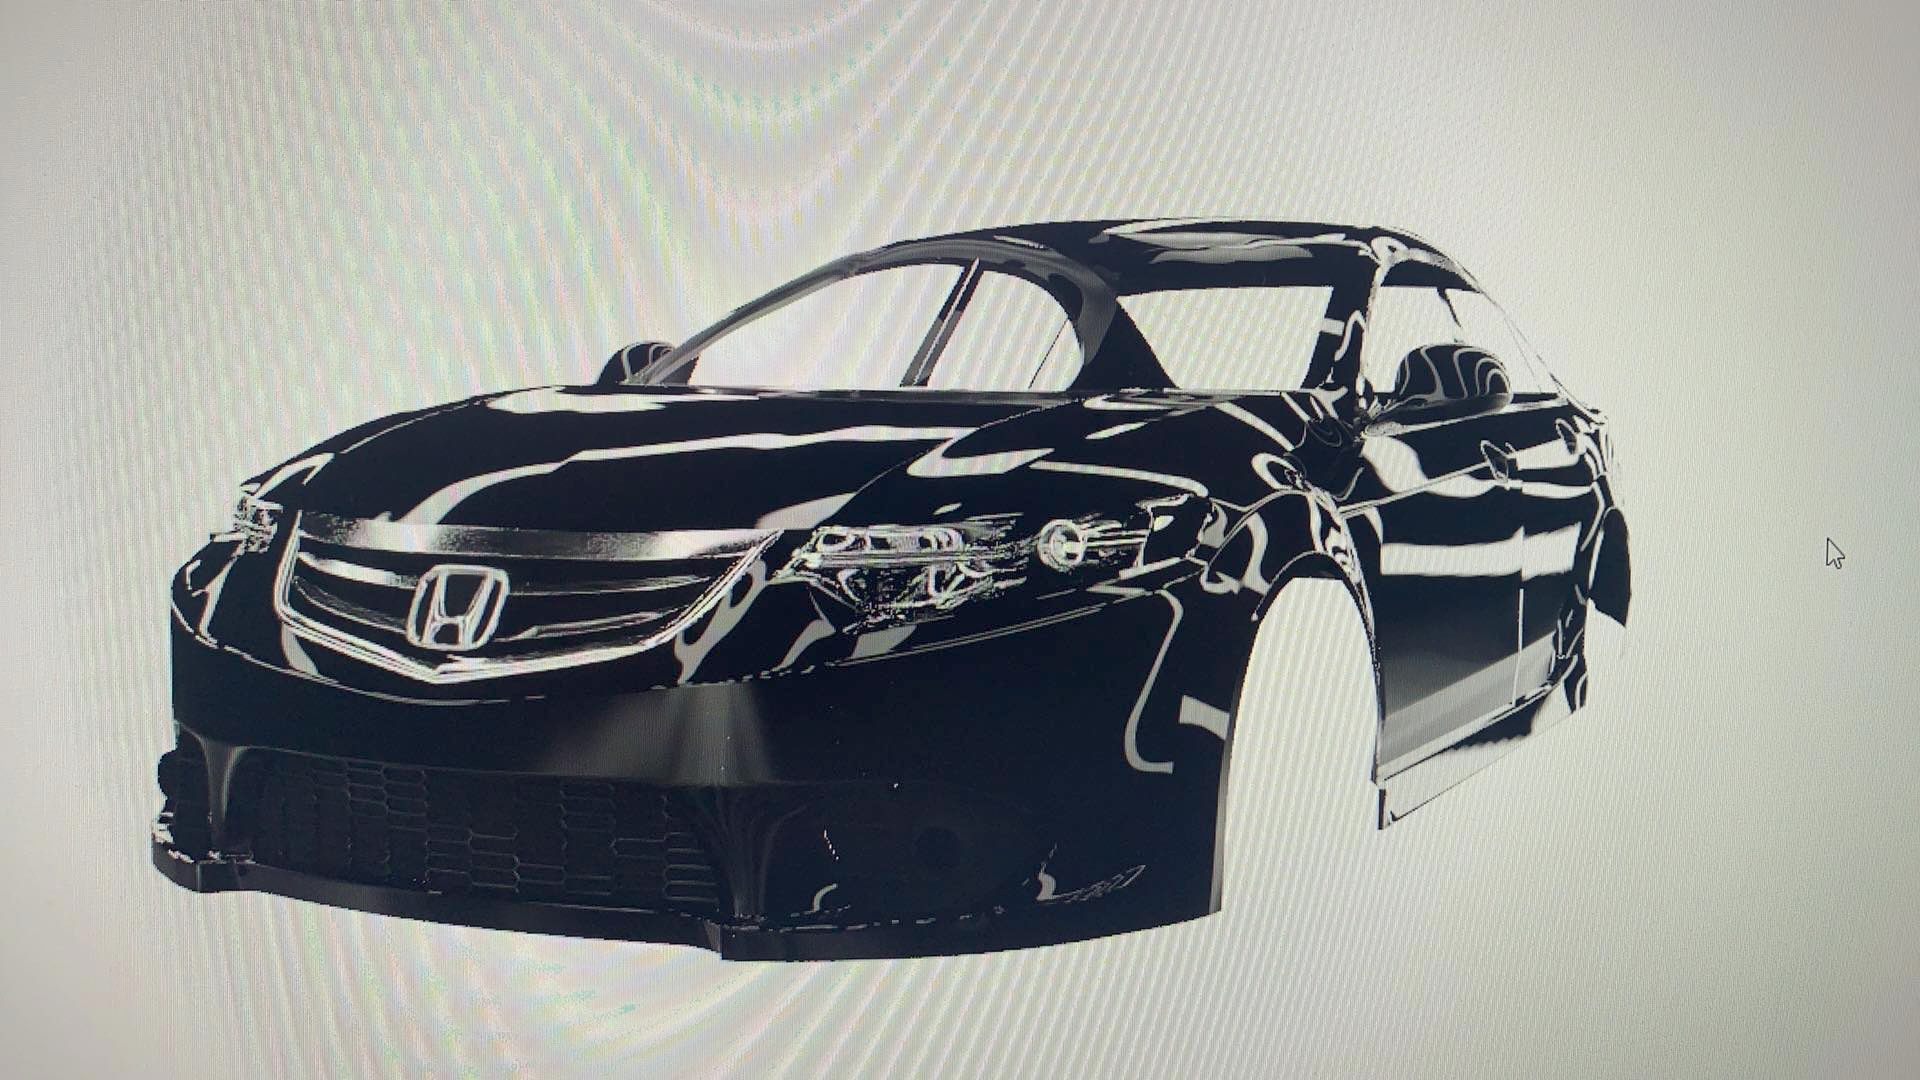 Car render challenge 2020 - Honda Accord VIII